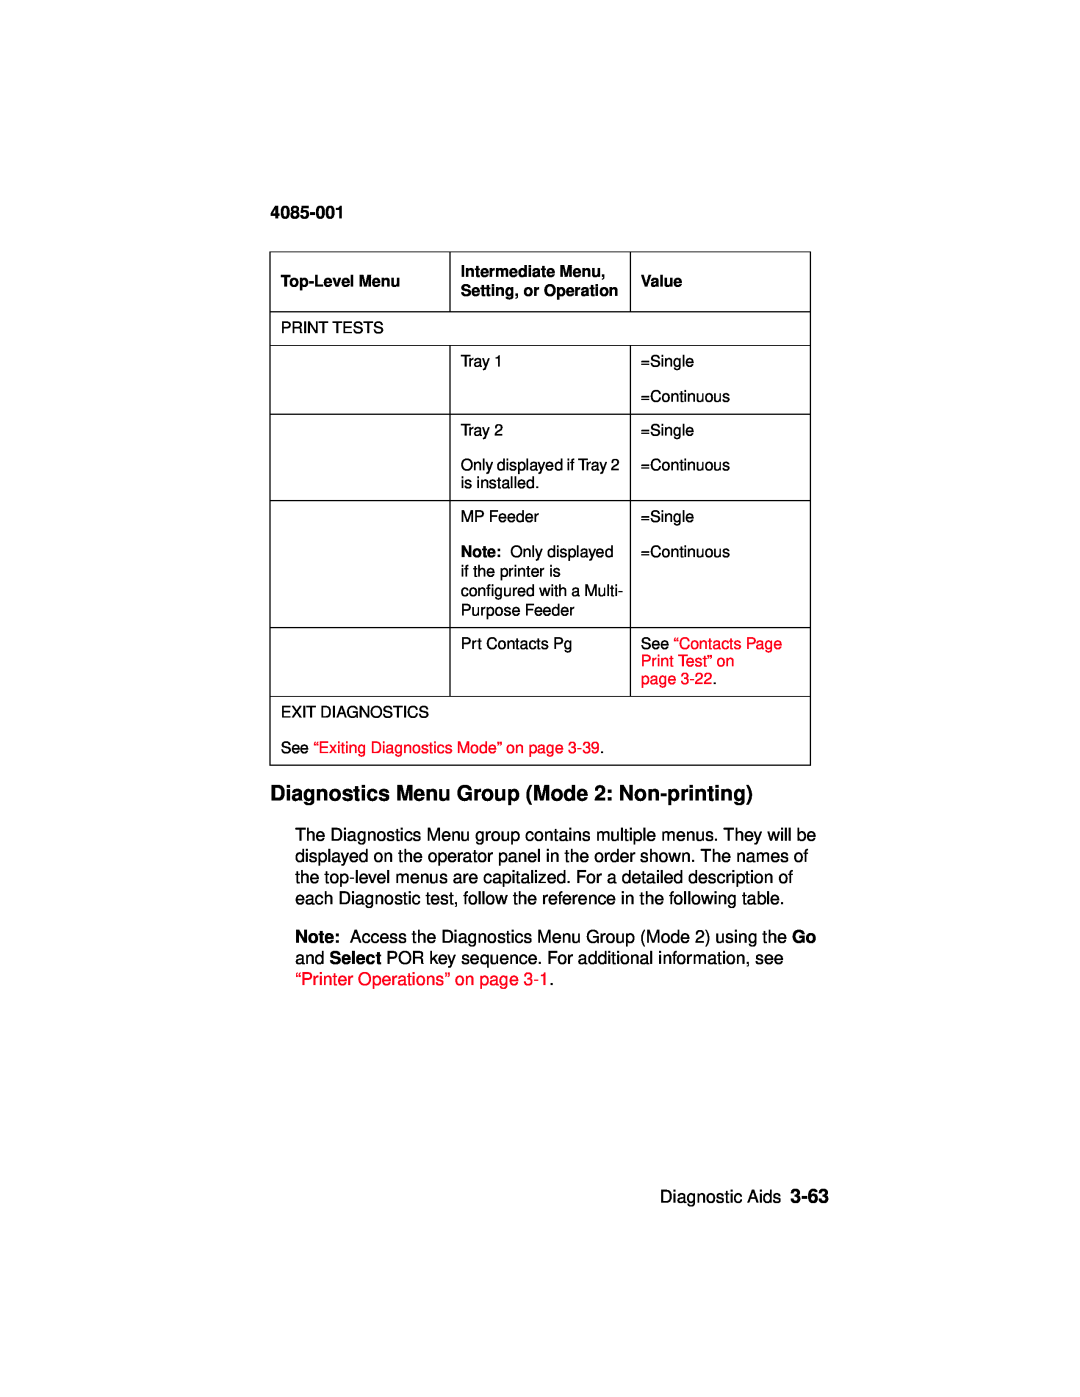 Lexmark Printer, J110 manual Diagnostics Menu Group Mode 2: Non-printing, 4085-001 